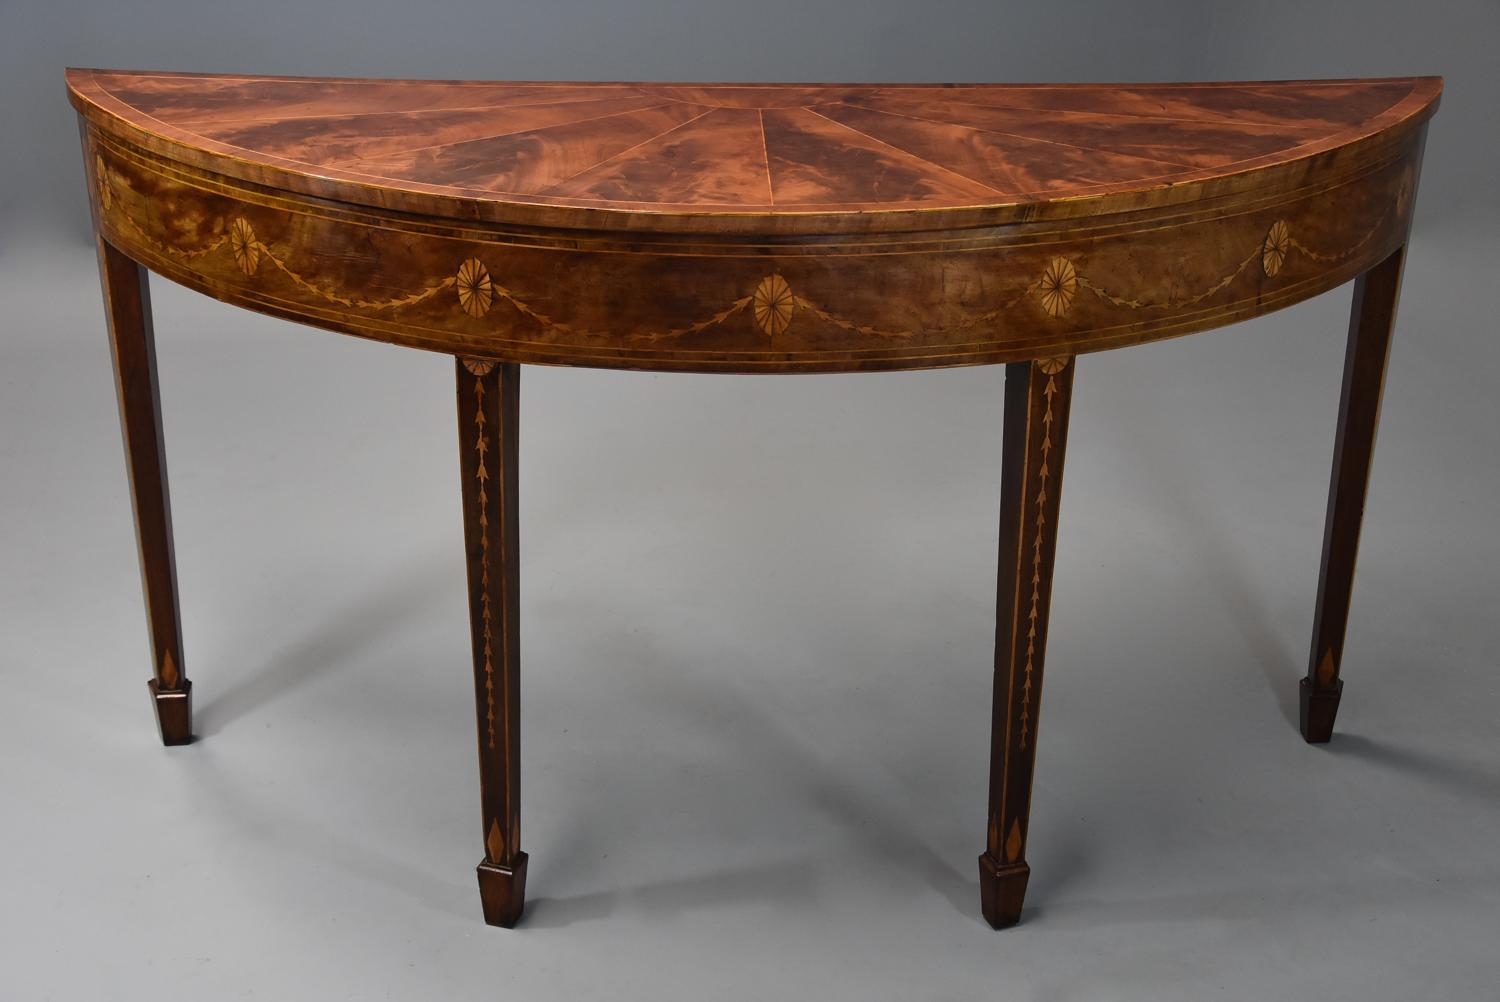 Rare 18thc semi-elliptical mahogany side table with superb patina